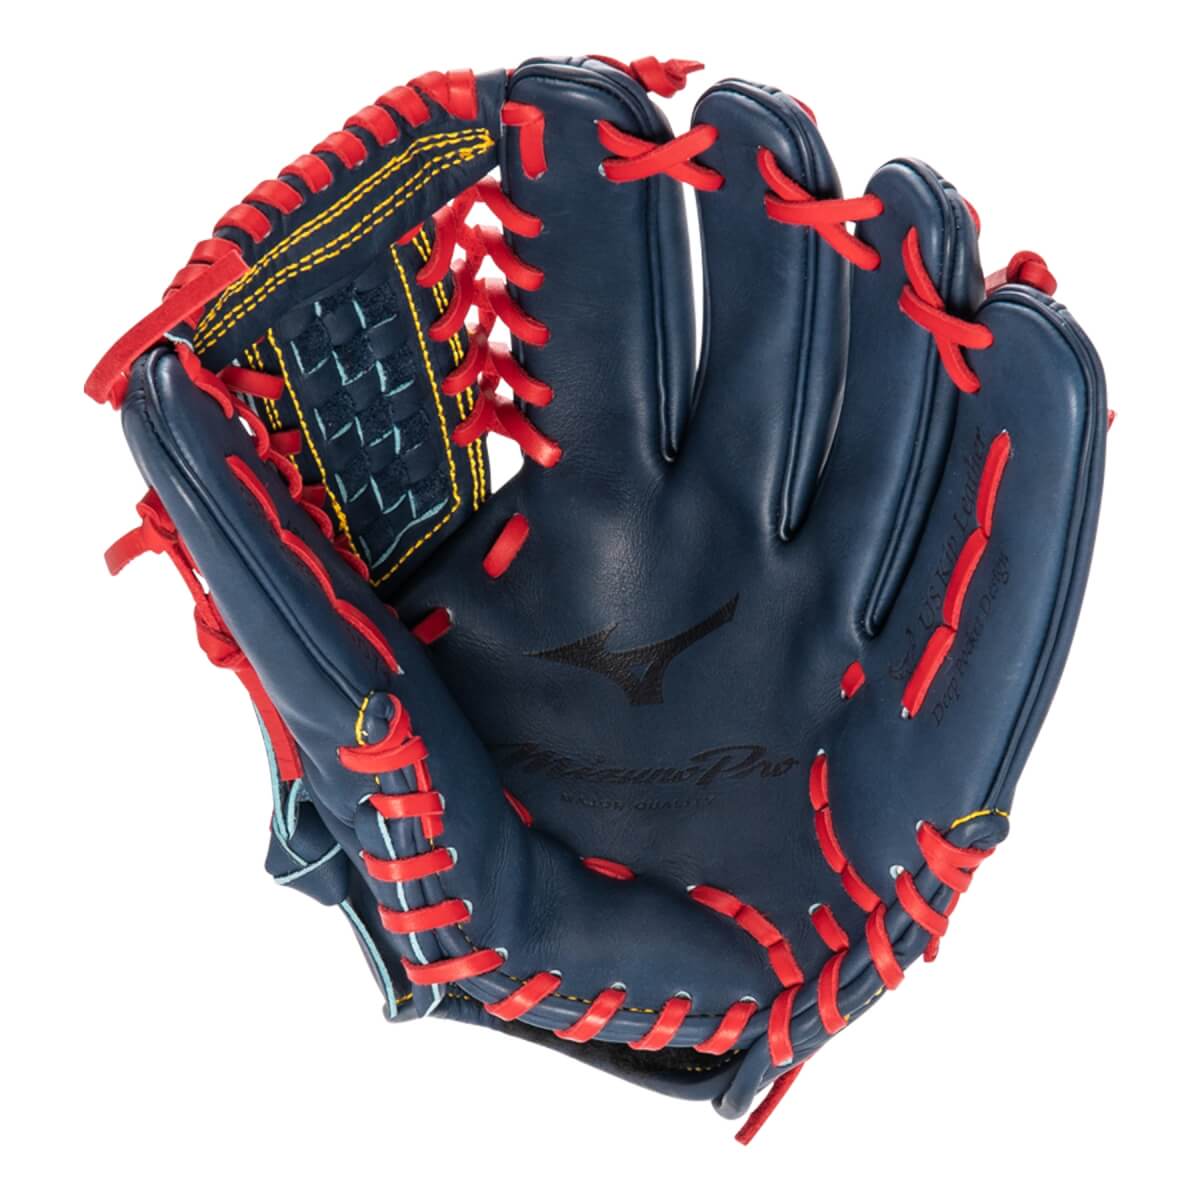 Mizuno Pro Mike Soroka 12" Baseball Glove: GMP2MS-100DT4